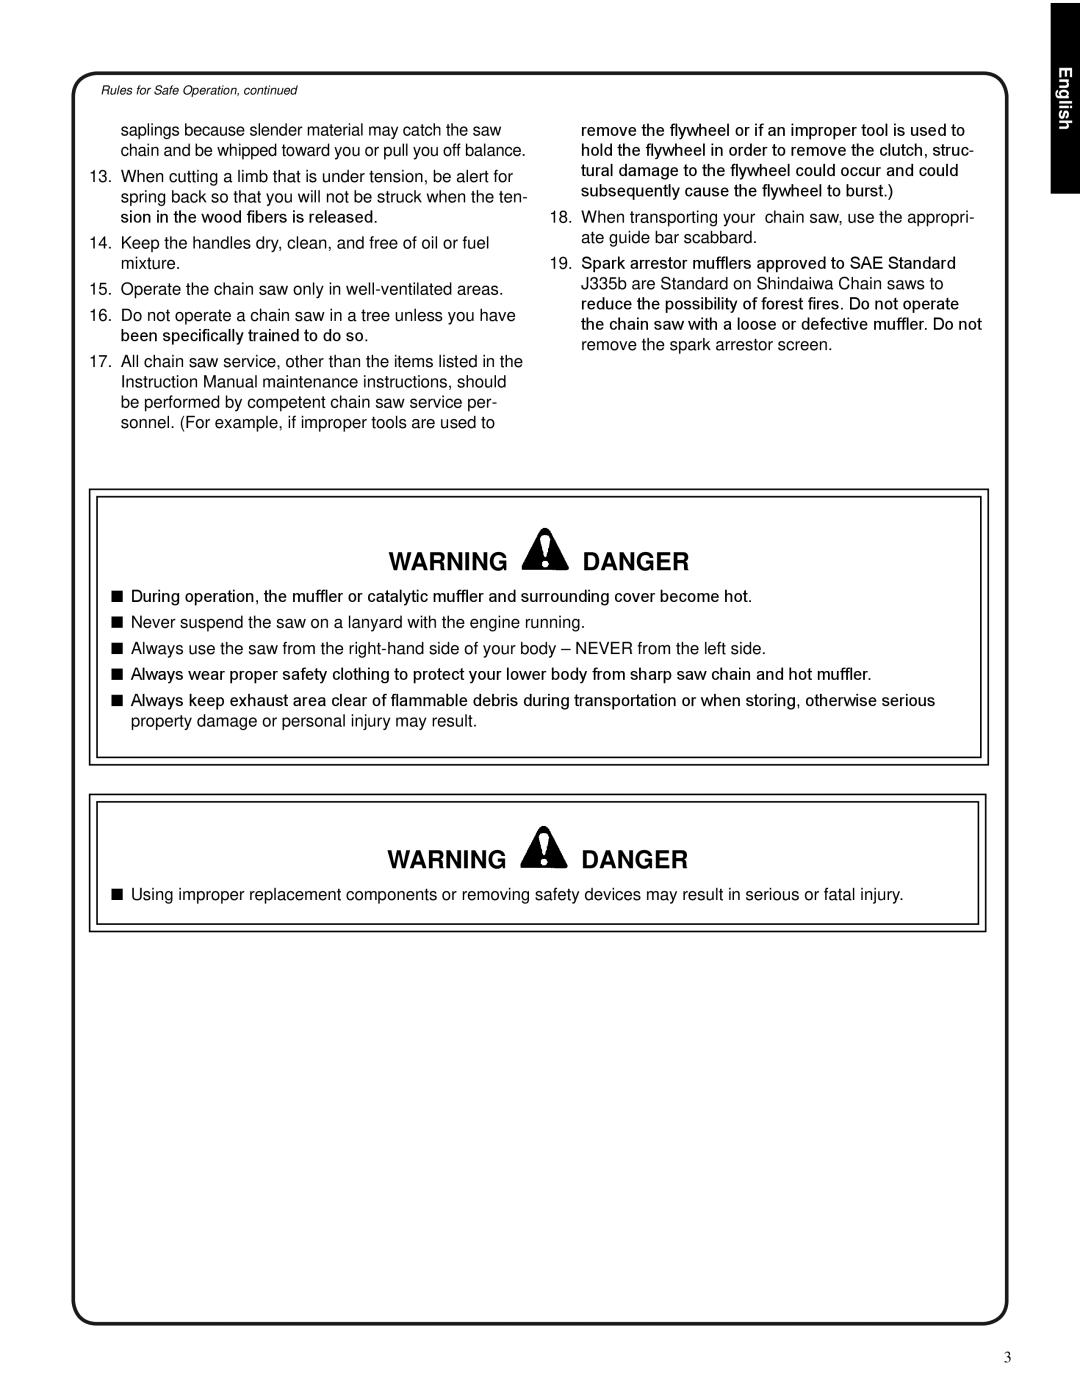 Shindaiwa 326T, 82085 manual Warning Danger, English, Rules for Safe Operation, continued 